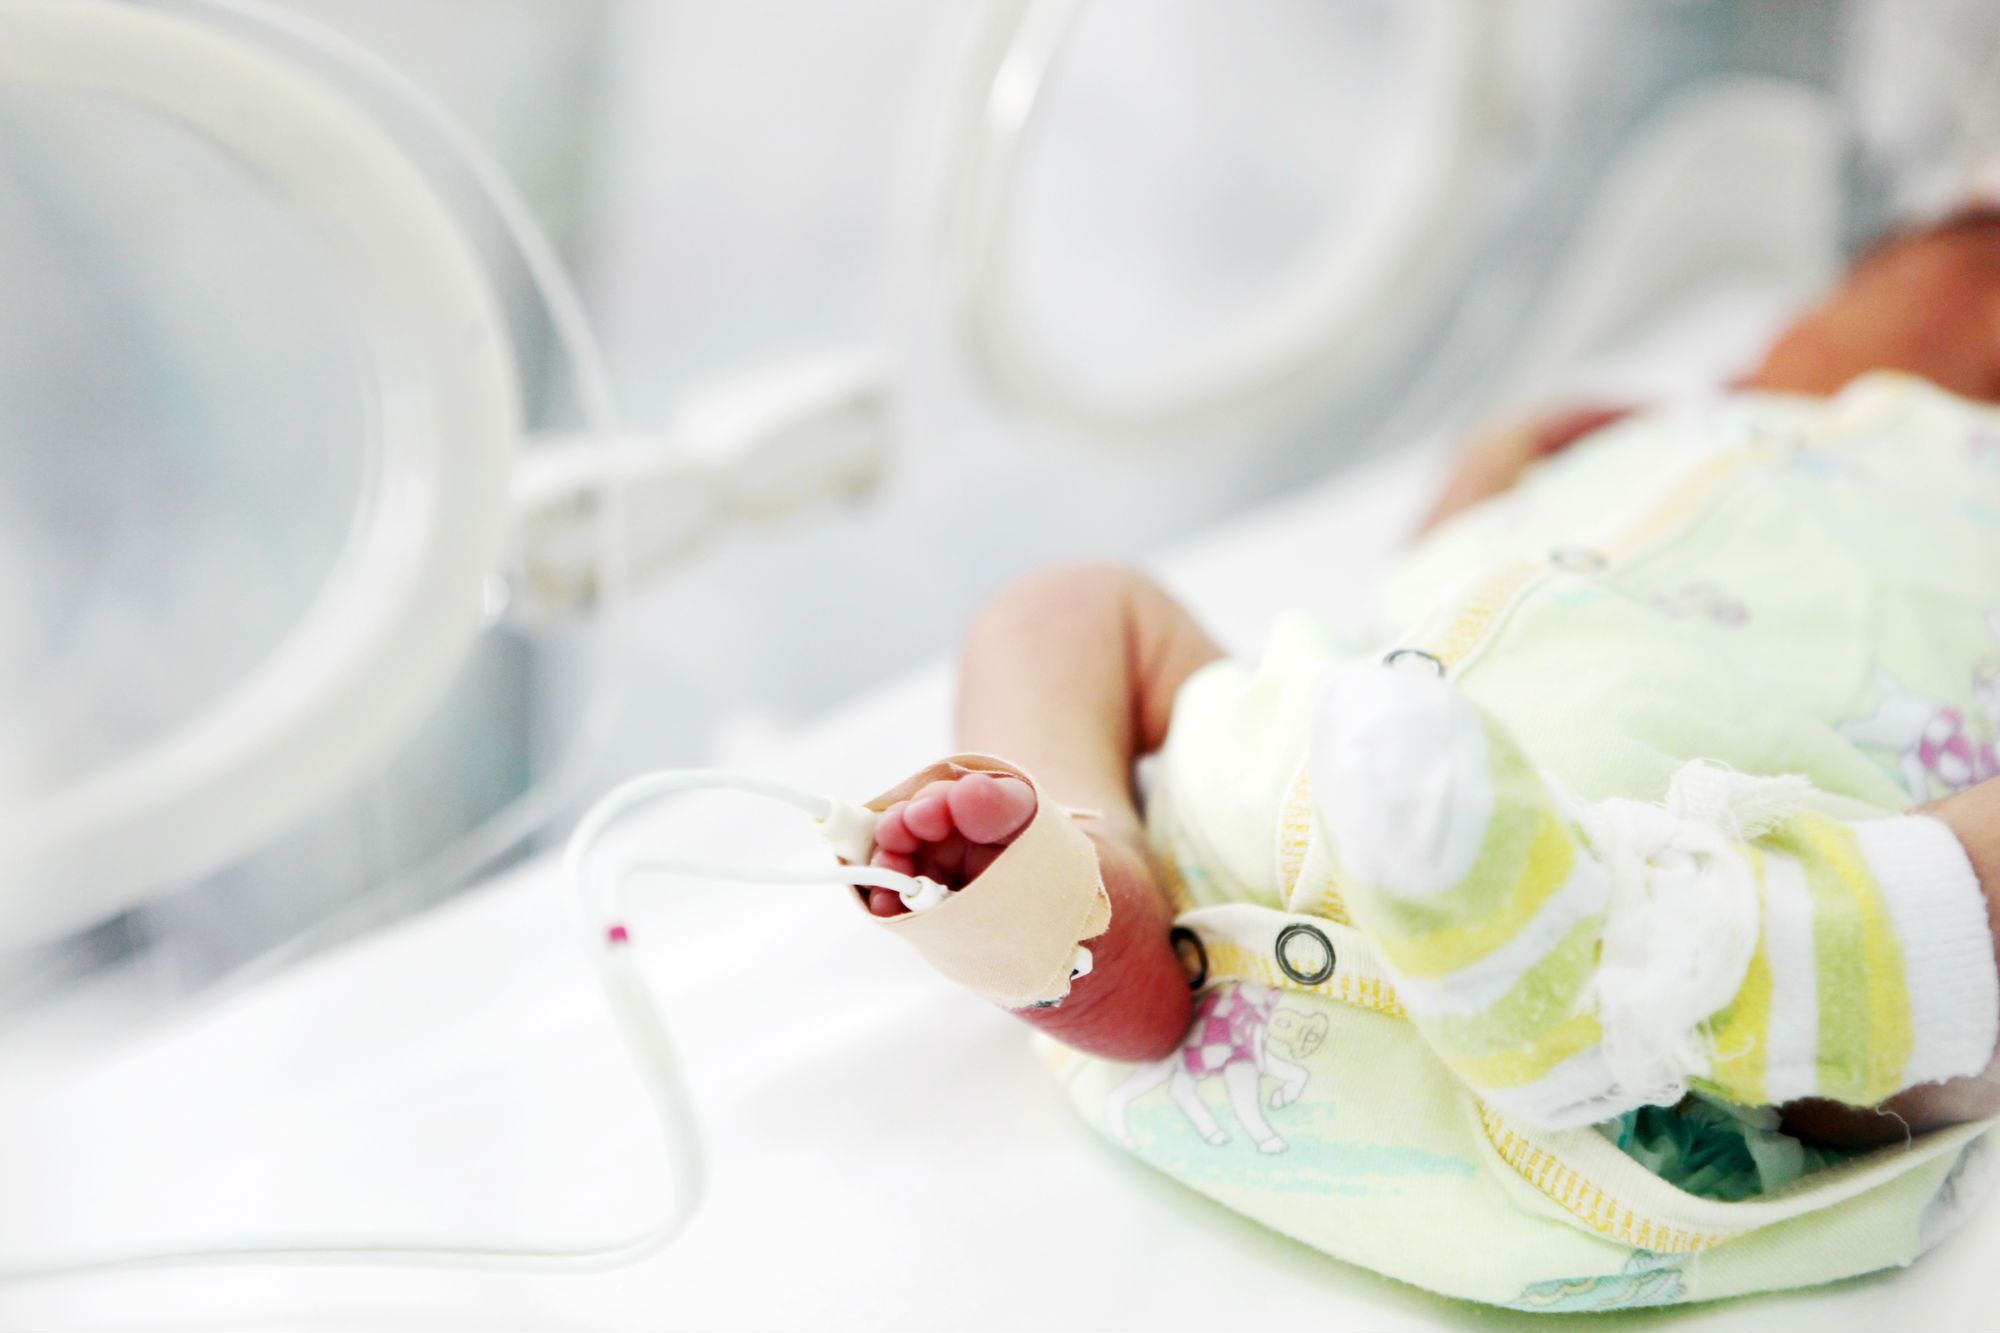 Infant in hospital